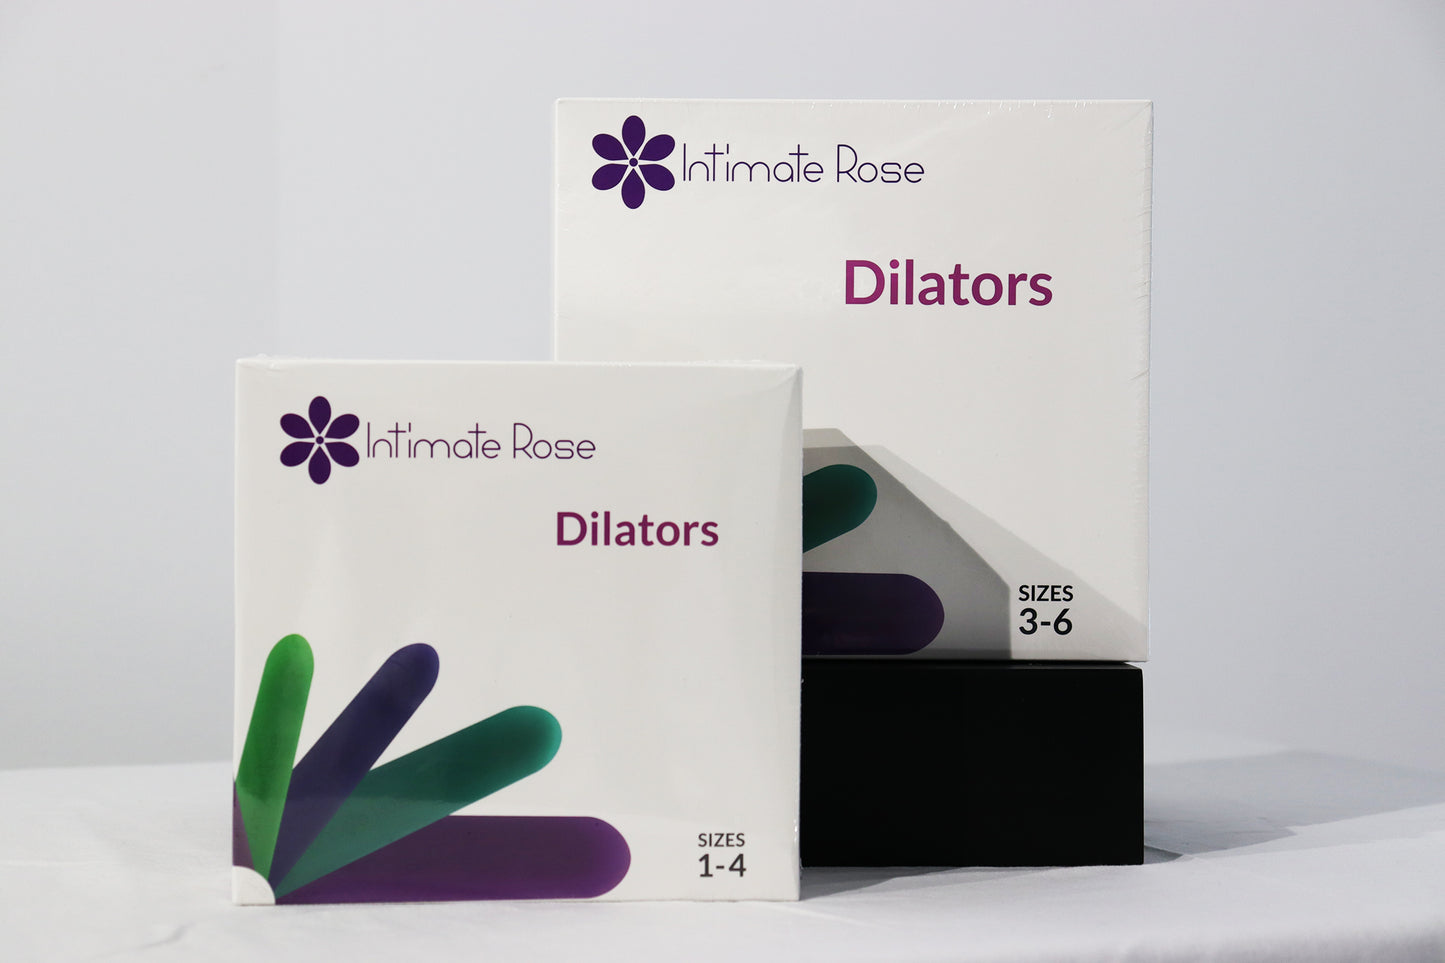 Intimate Rose - Dilators Size 3-6